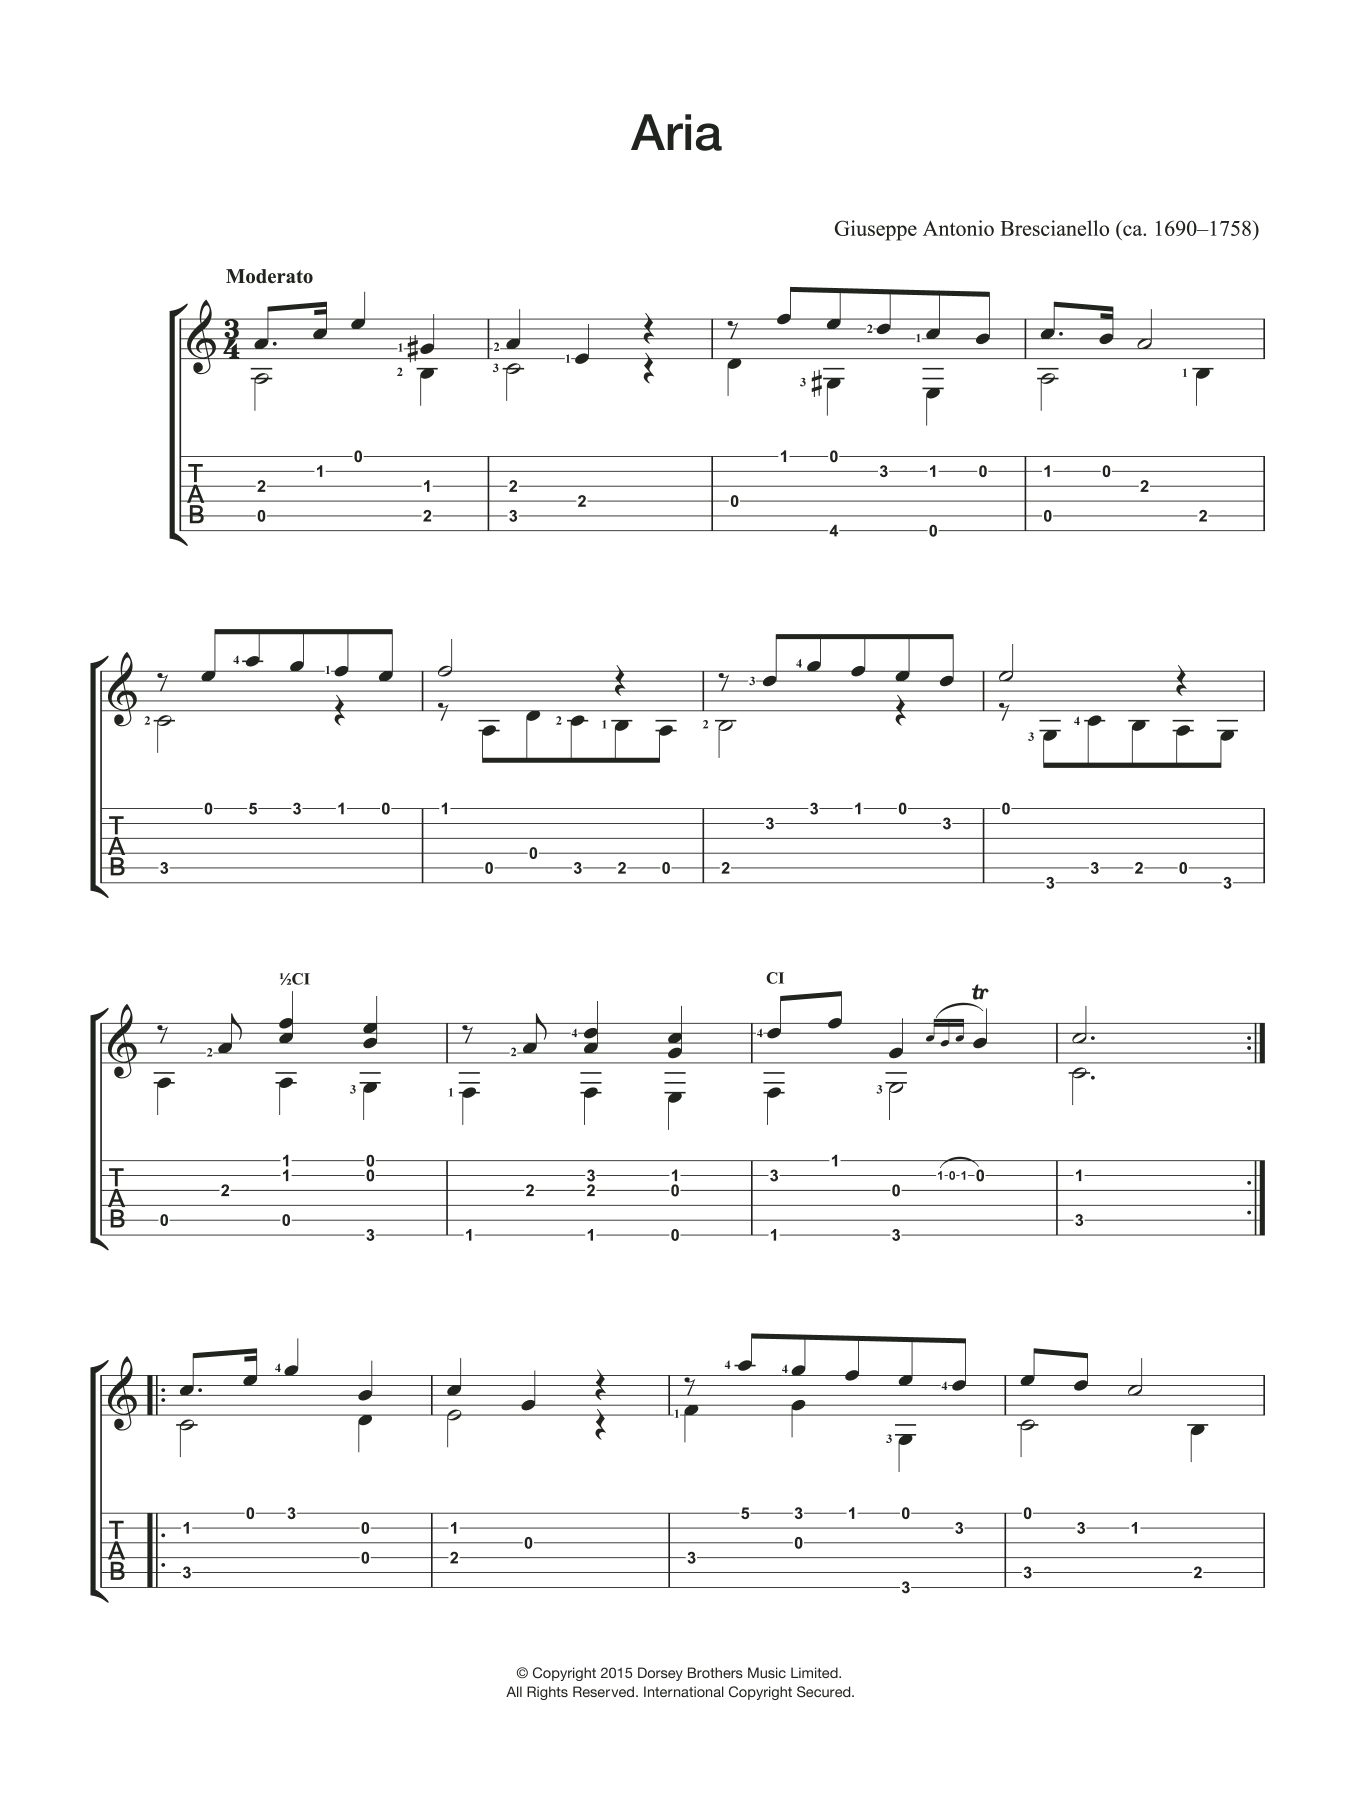 Giuseppe Antonio Brescianello Aria Sheet Music Notes & Chords for Guitar - Download or Print PDF